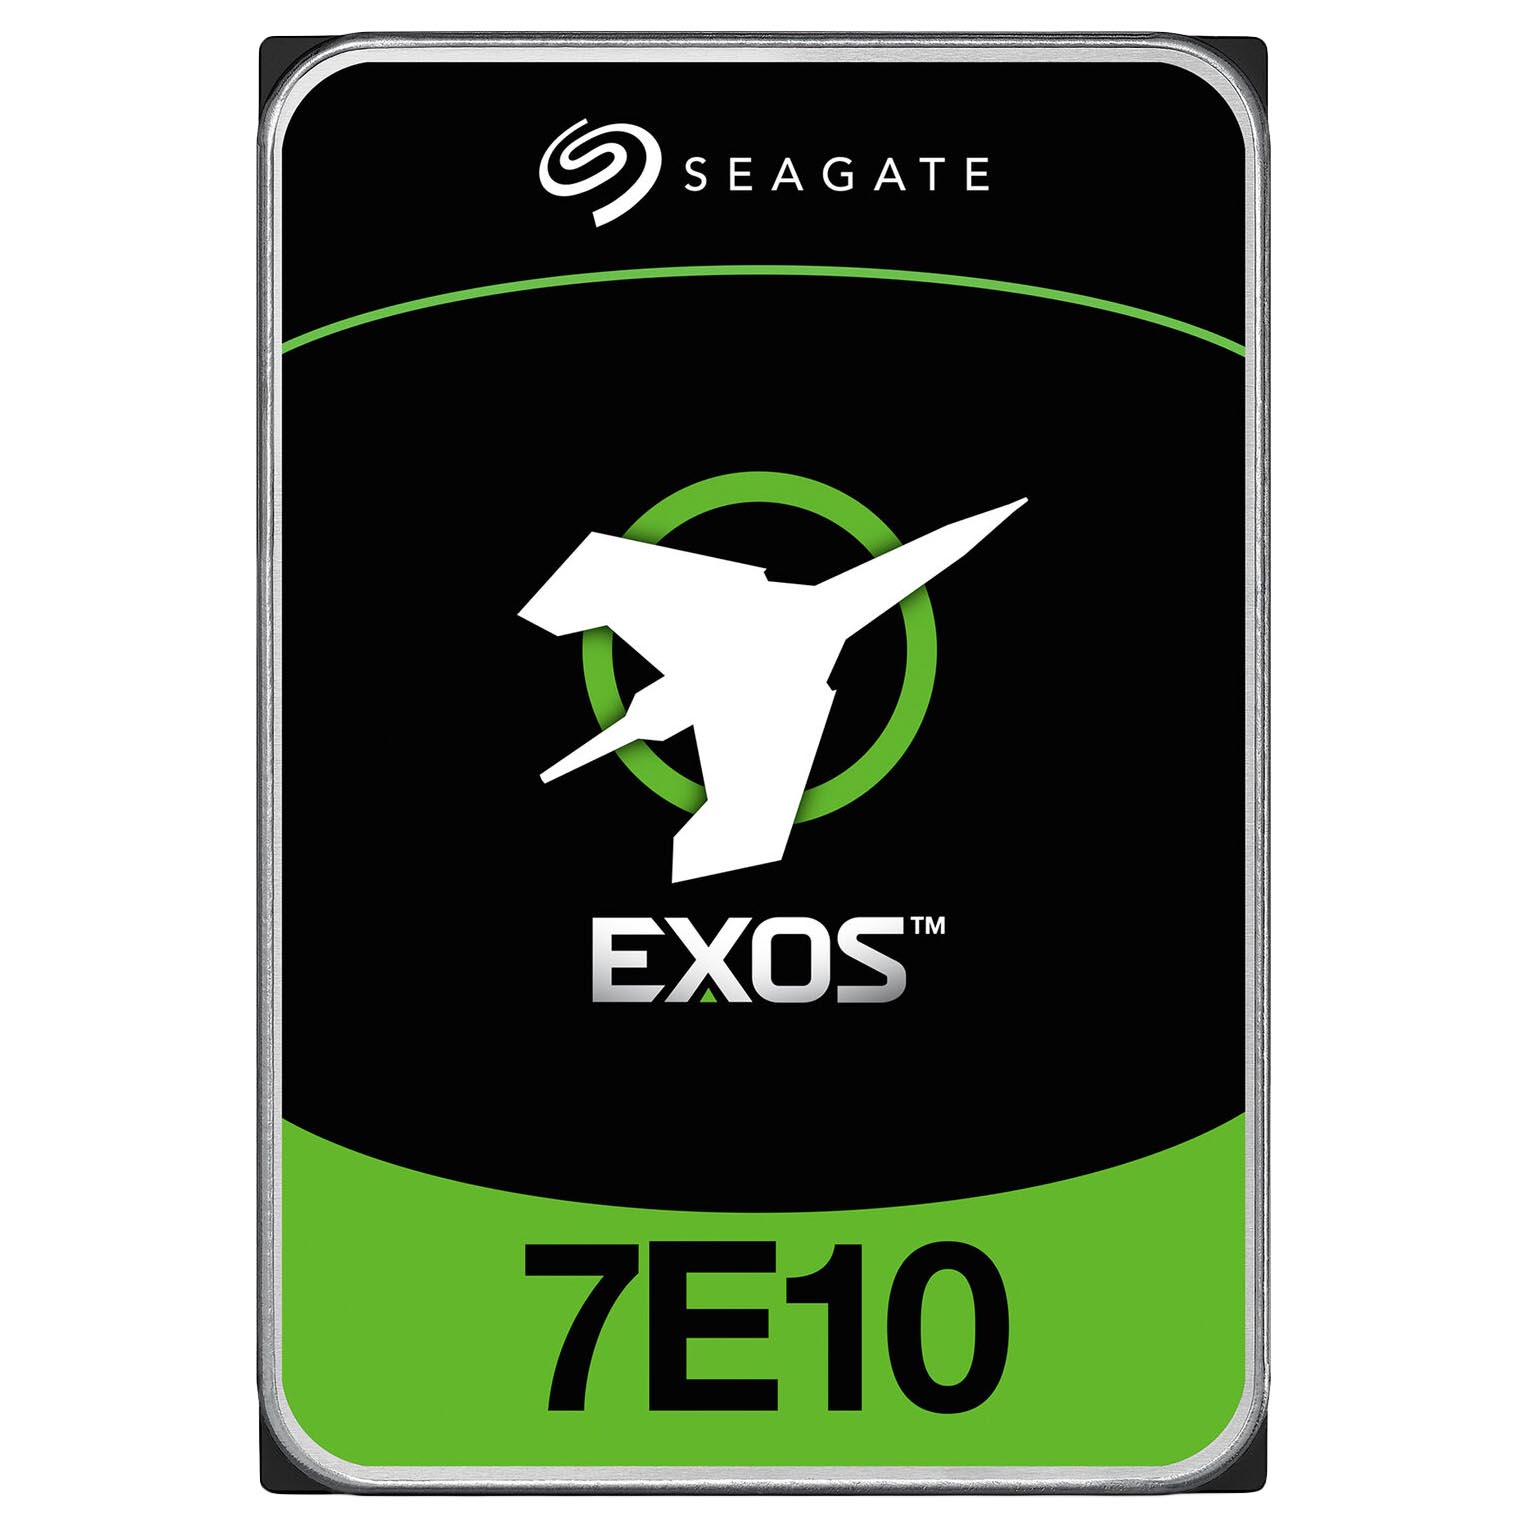 Внутренний жесткий диск Seagate Exos 7E10, ST8000NM017B, 8 Тб жесткий диск seagate exos 4tb st4000nm000a